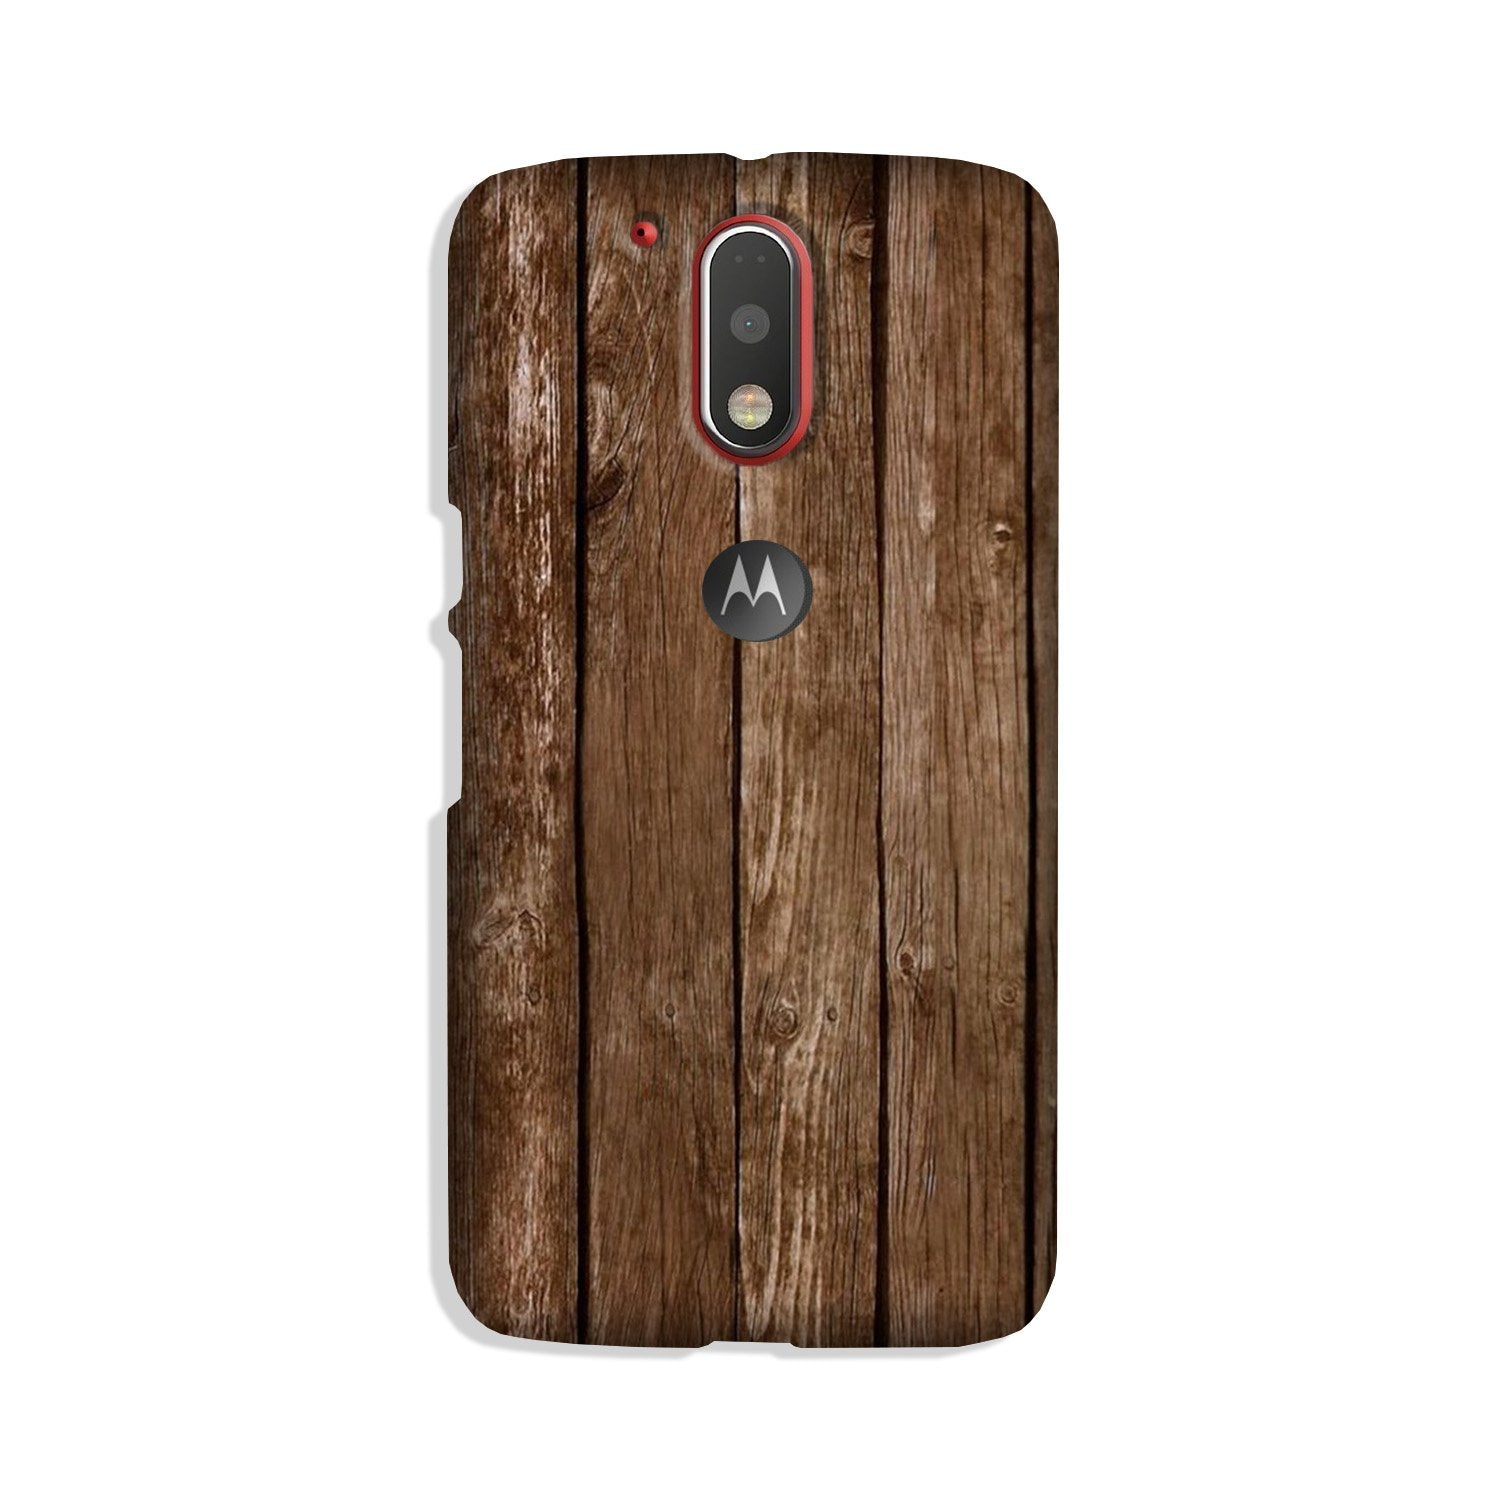 Wooden Look Case for Moto G4 Plus(Design - 112)